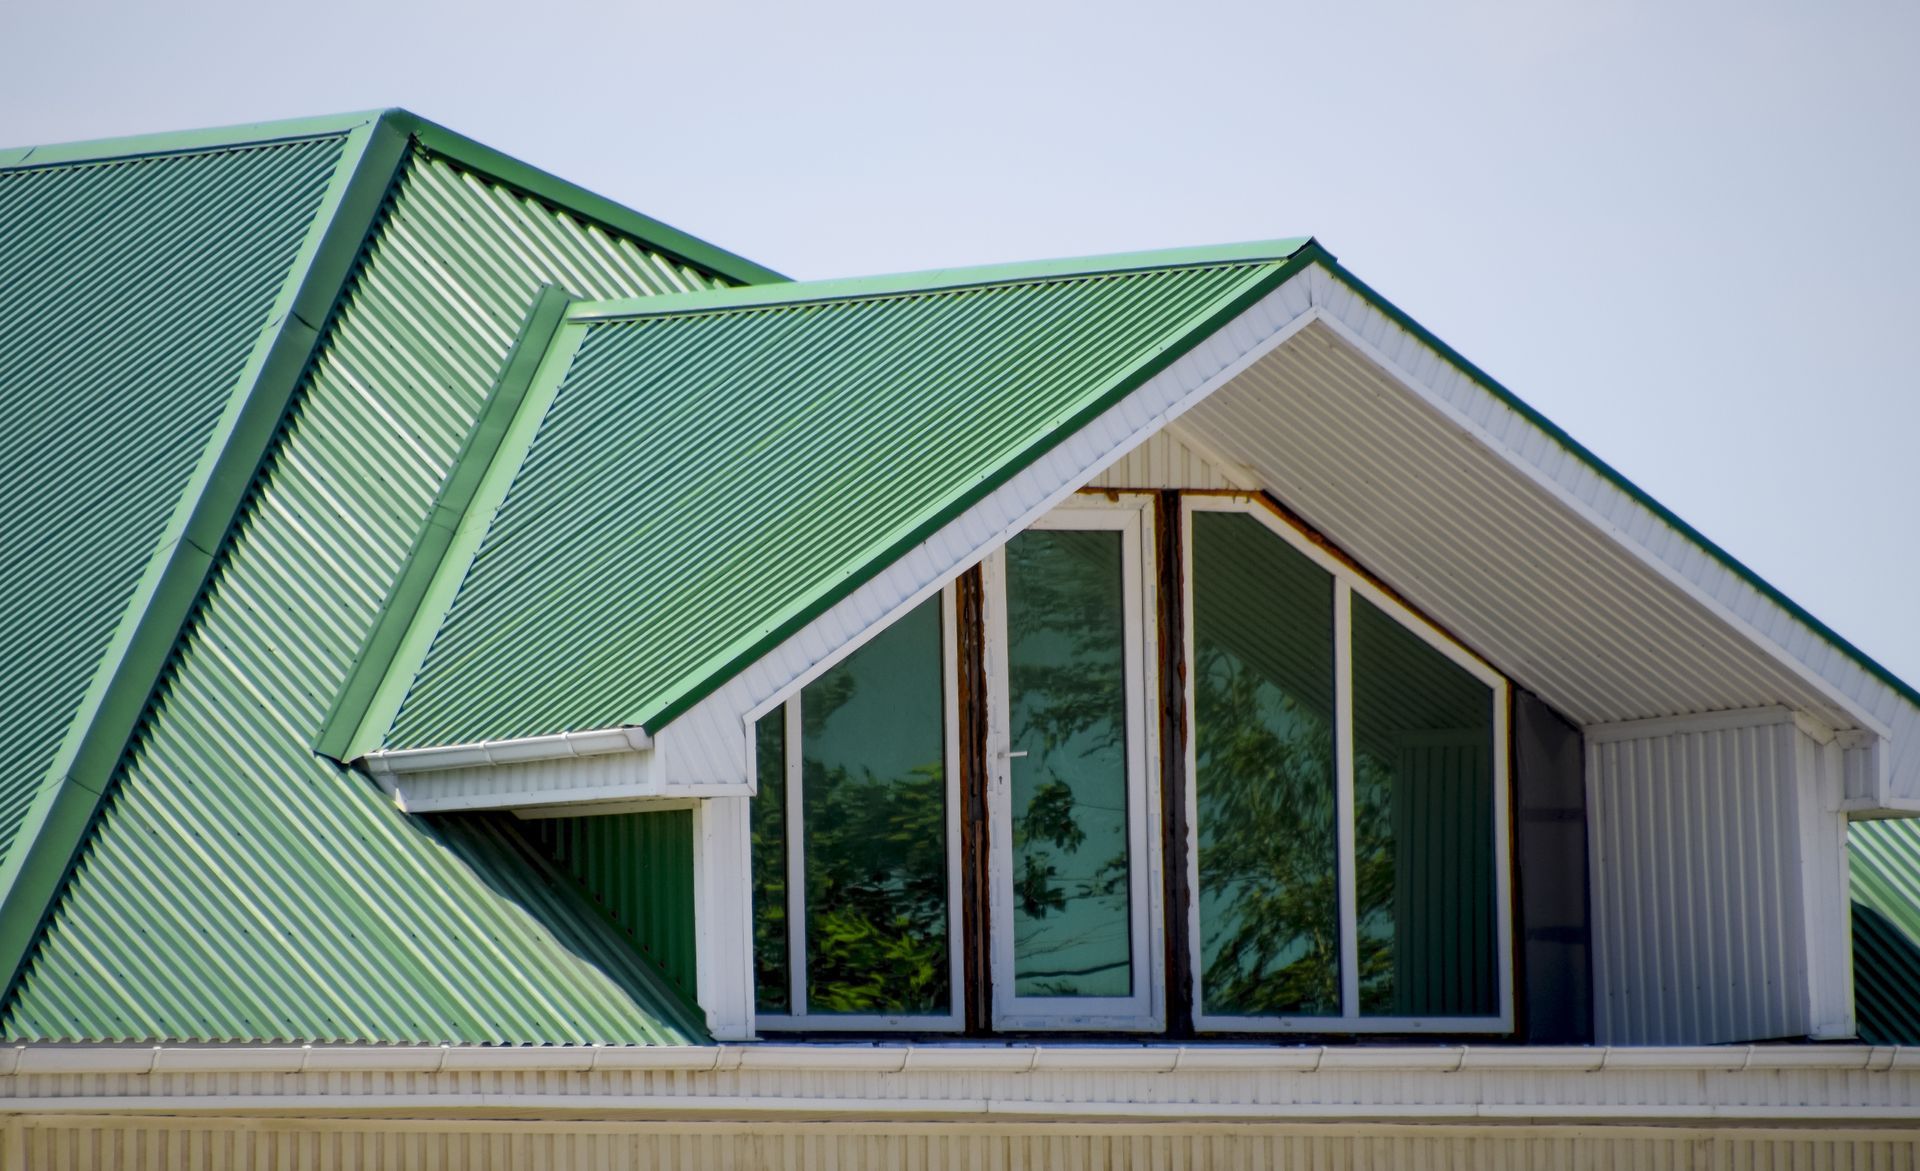 Green sheet metal roof